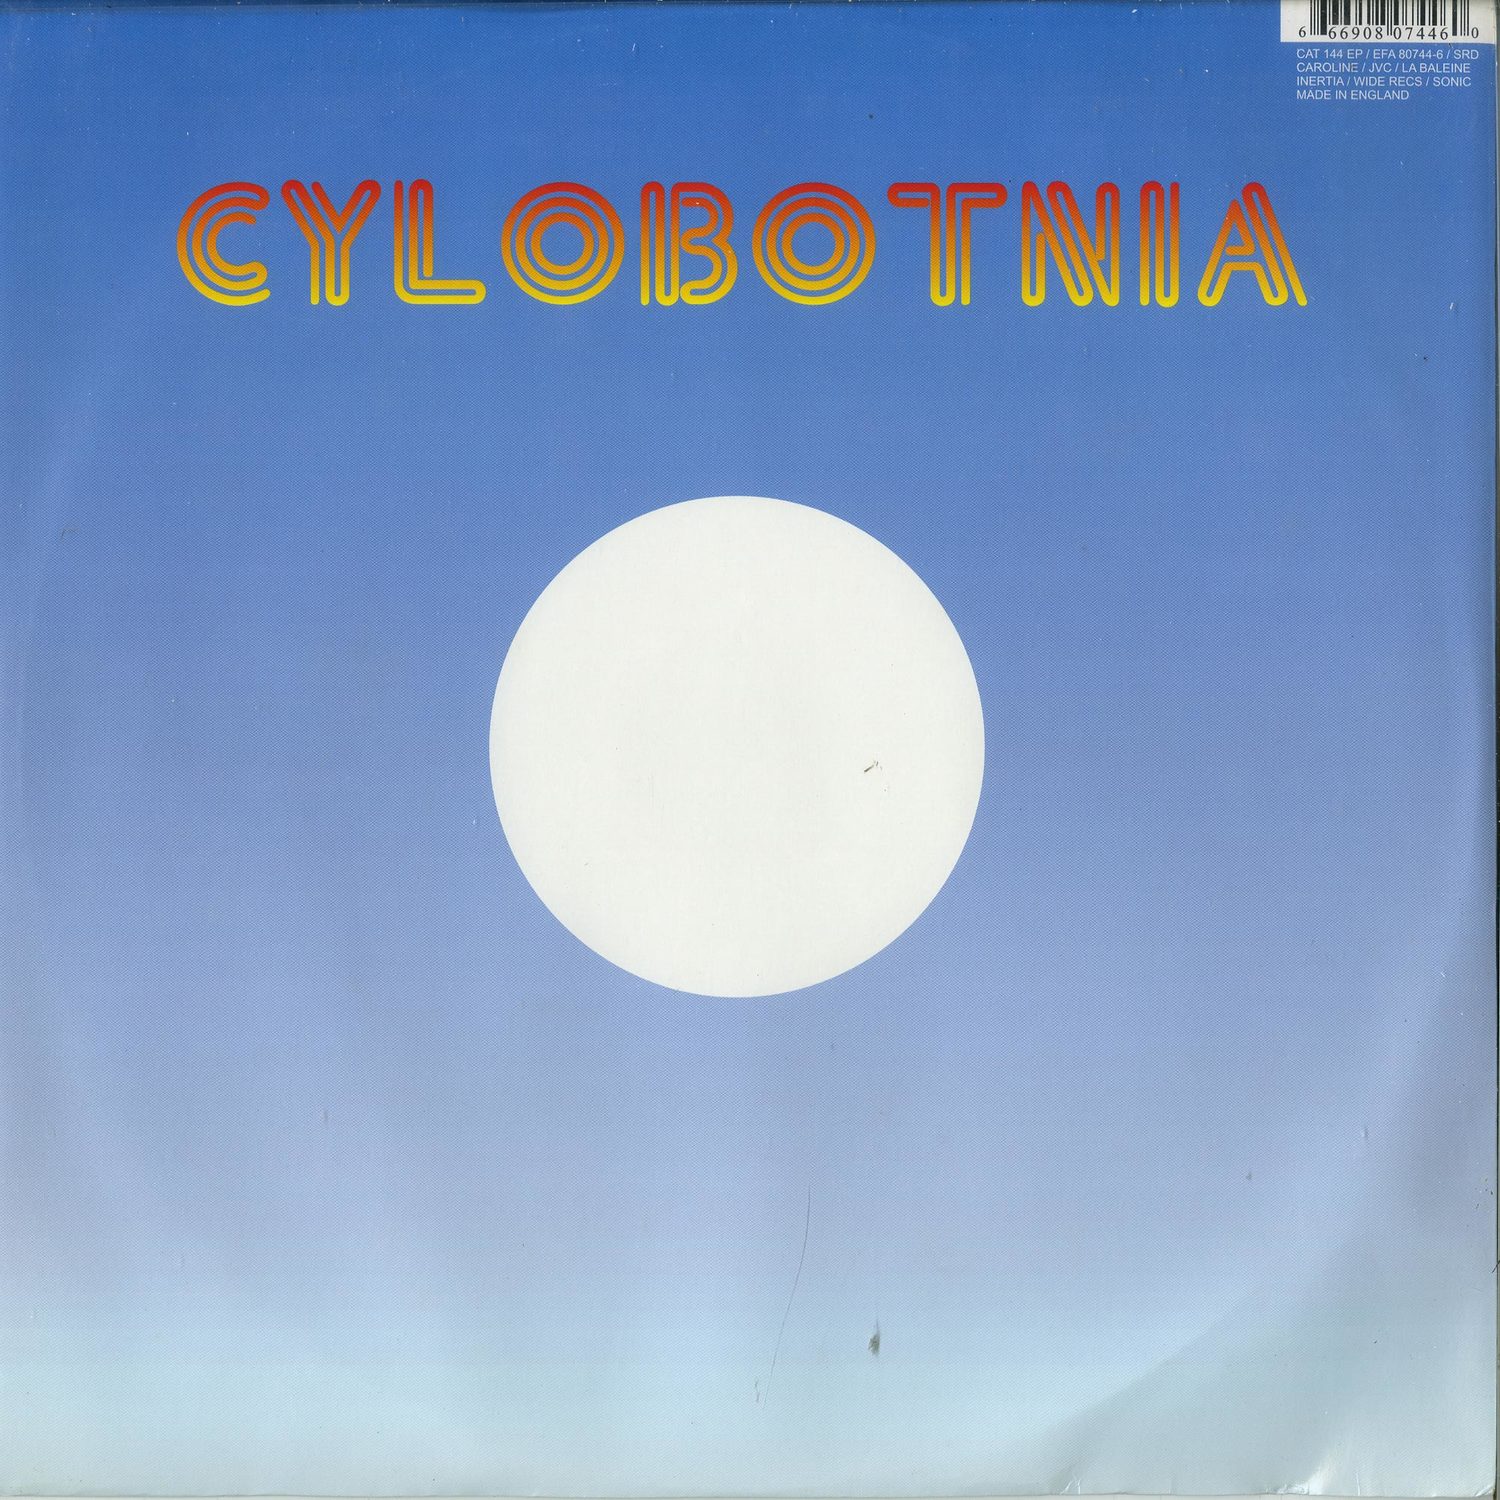 Cylobotnia - CYLOBOTNIA